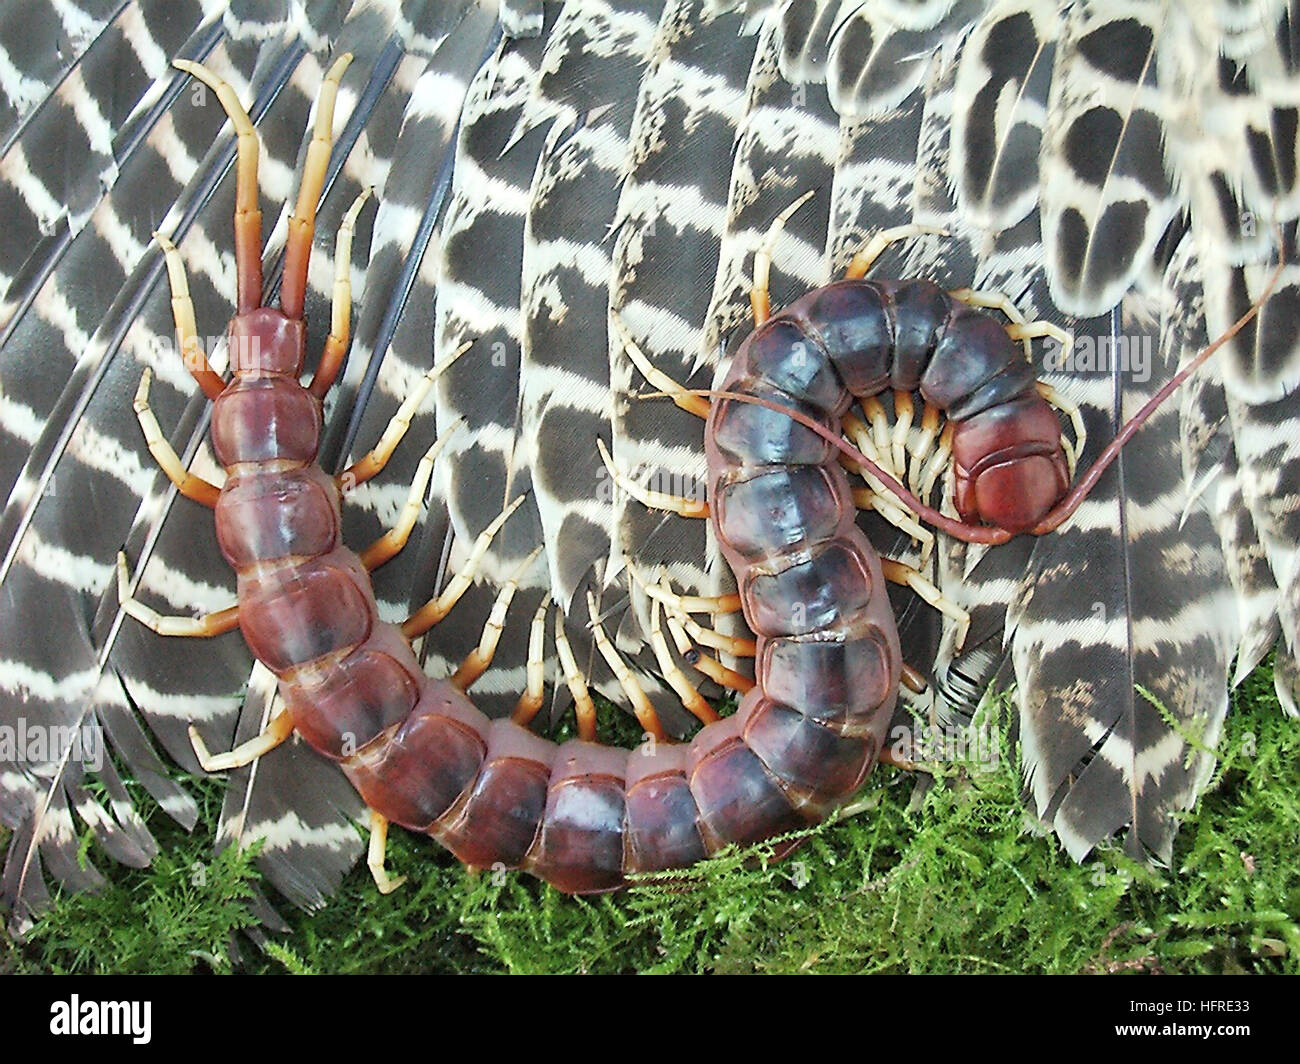 Amazonian giant centipede (Scolopendra gigantea) Stock Photo